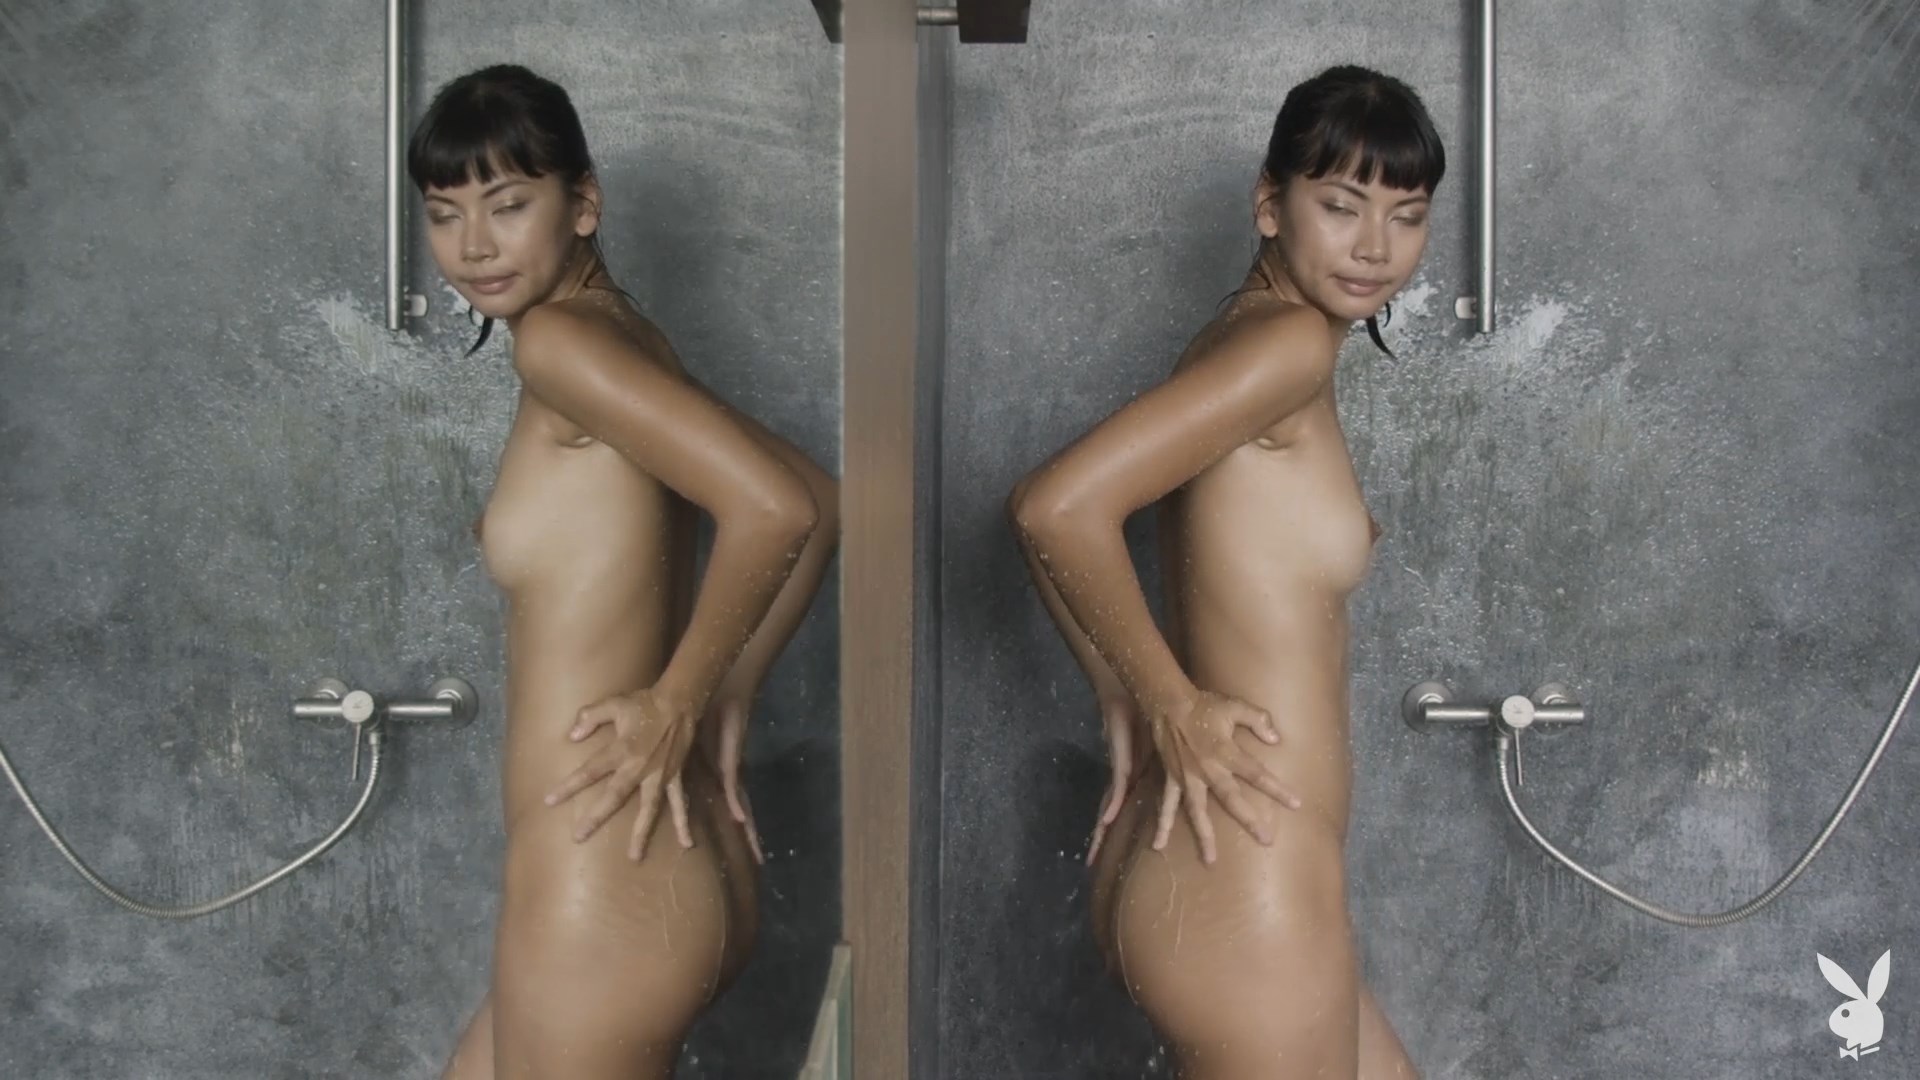 Cara Pin Nude - Soft Shower (39 Photos + GIFs & Video)